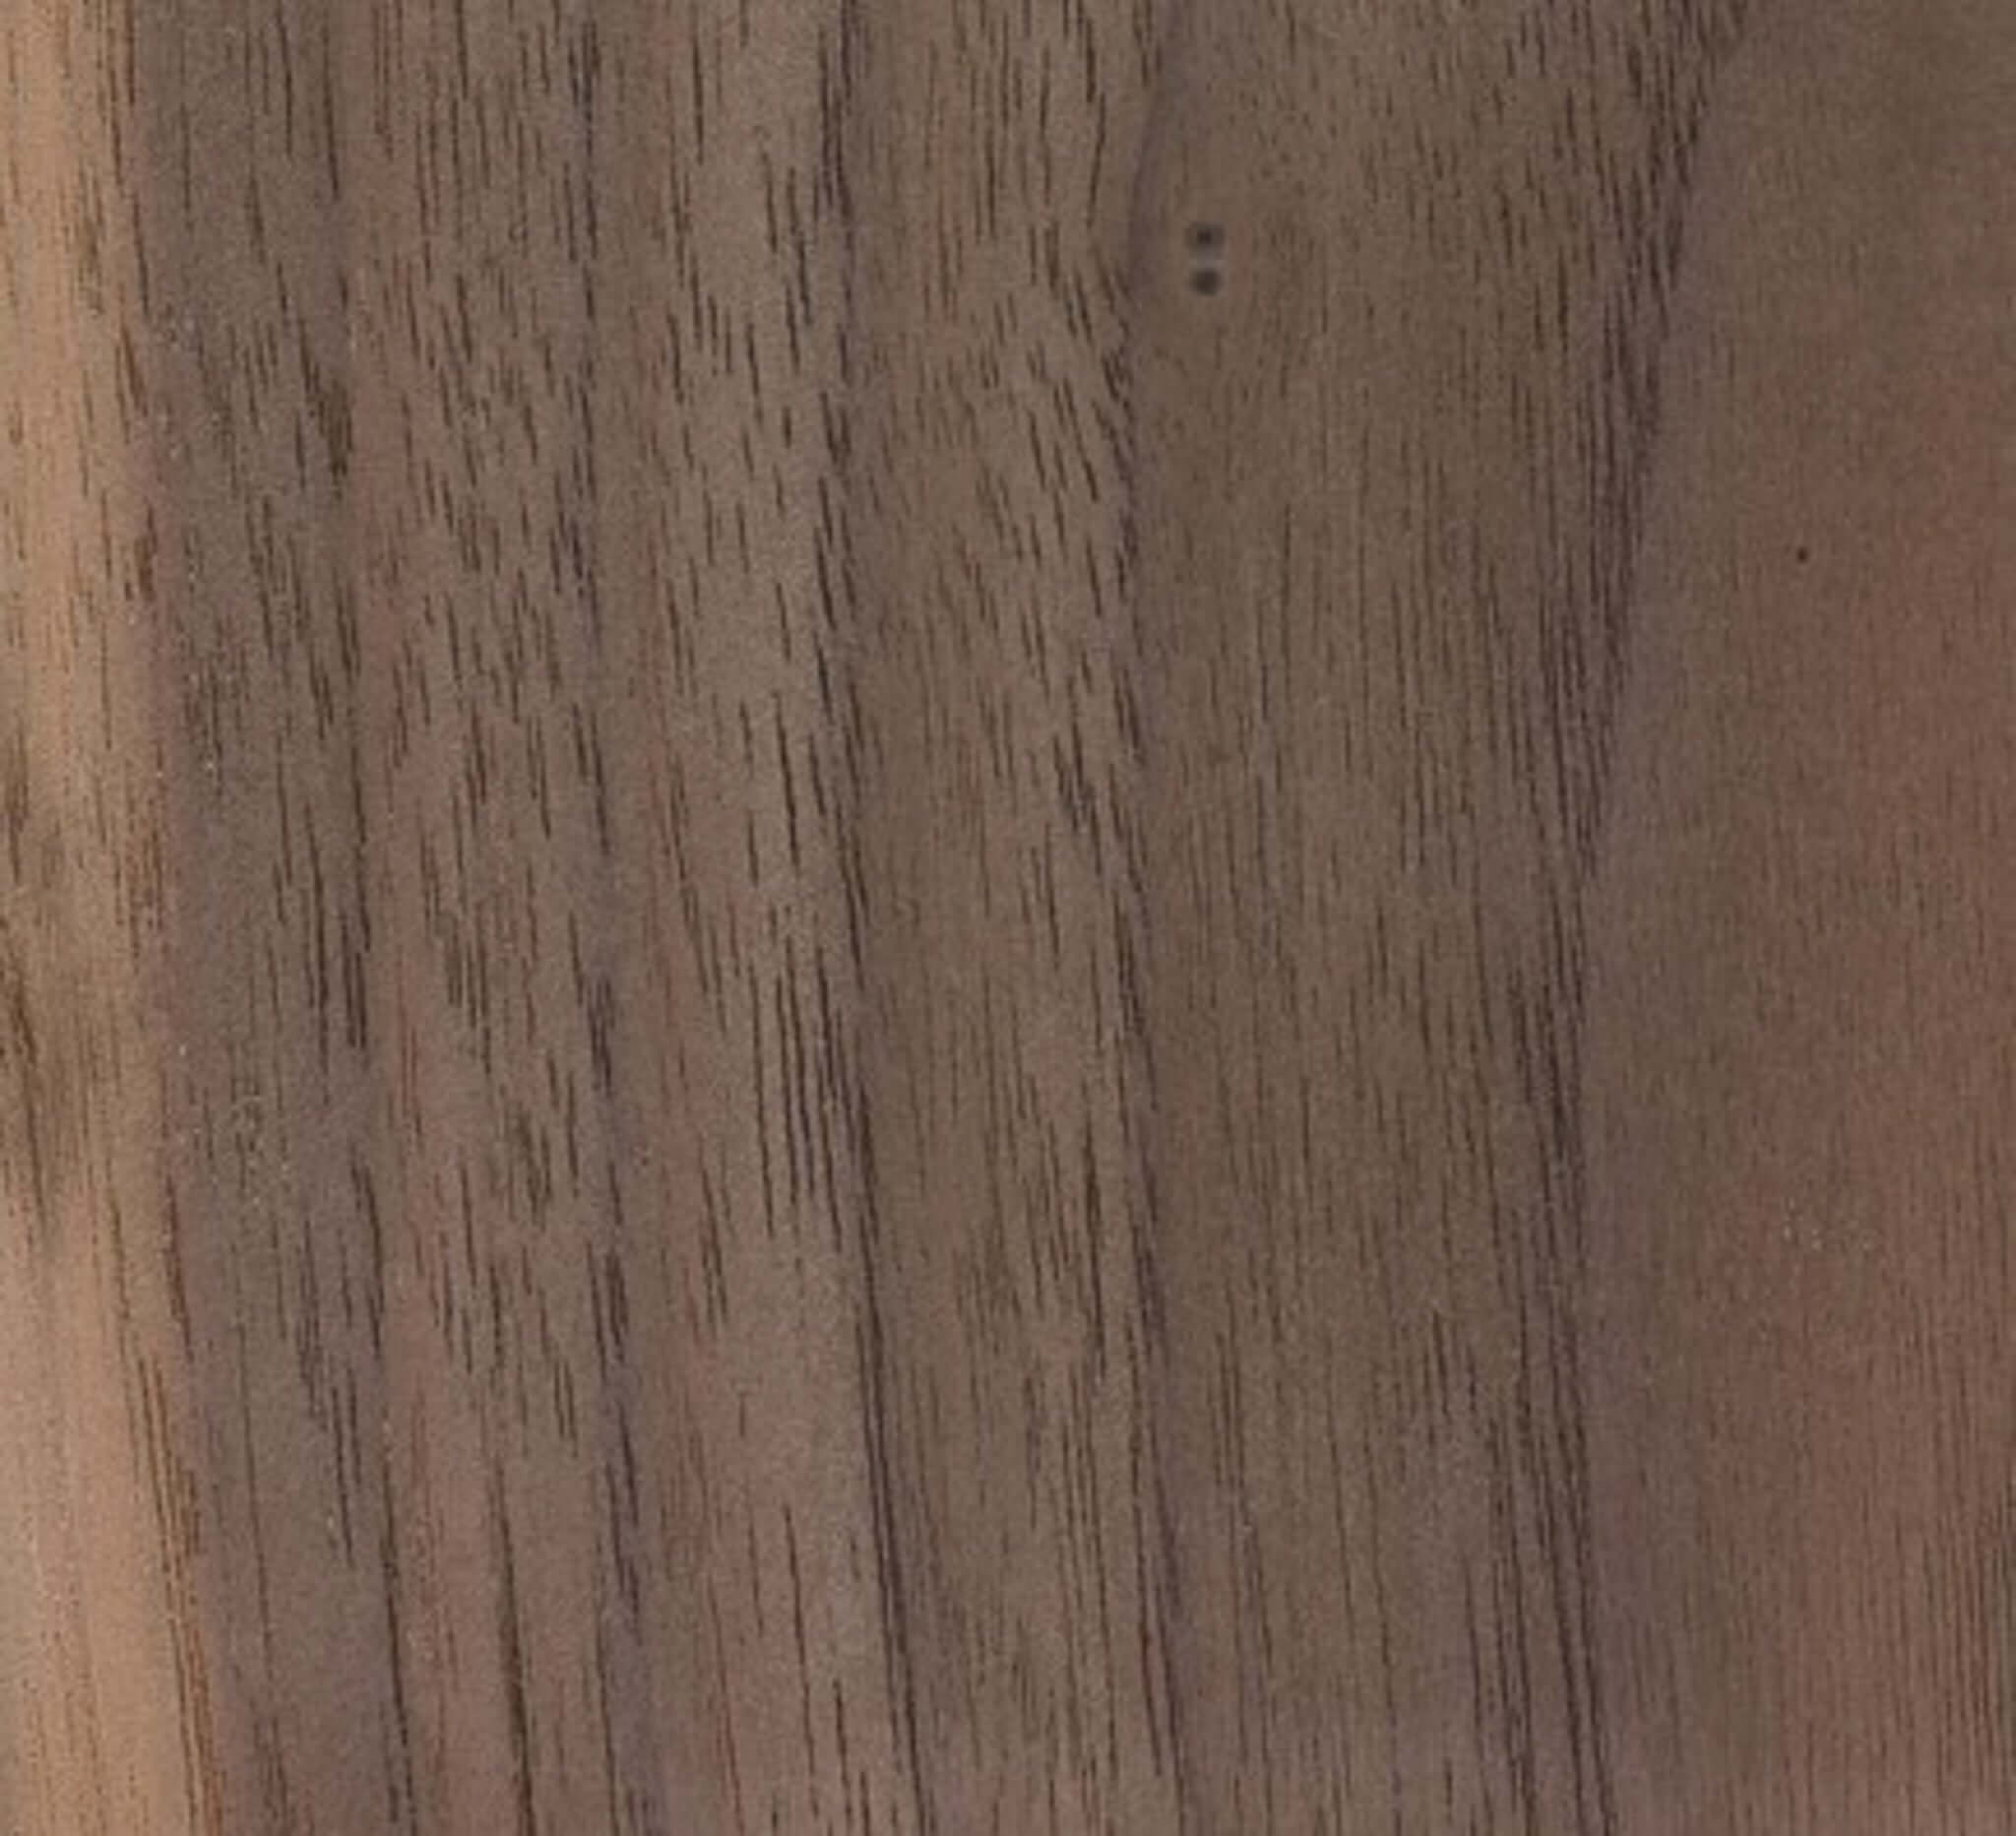 a sample of black walnut wood